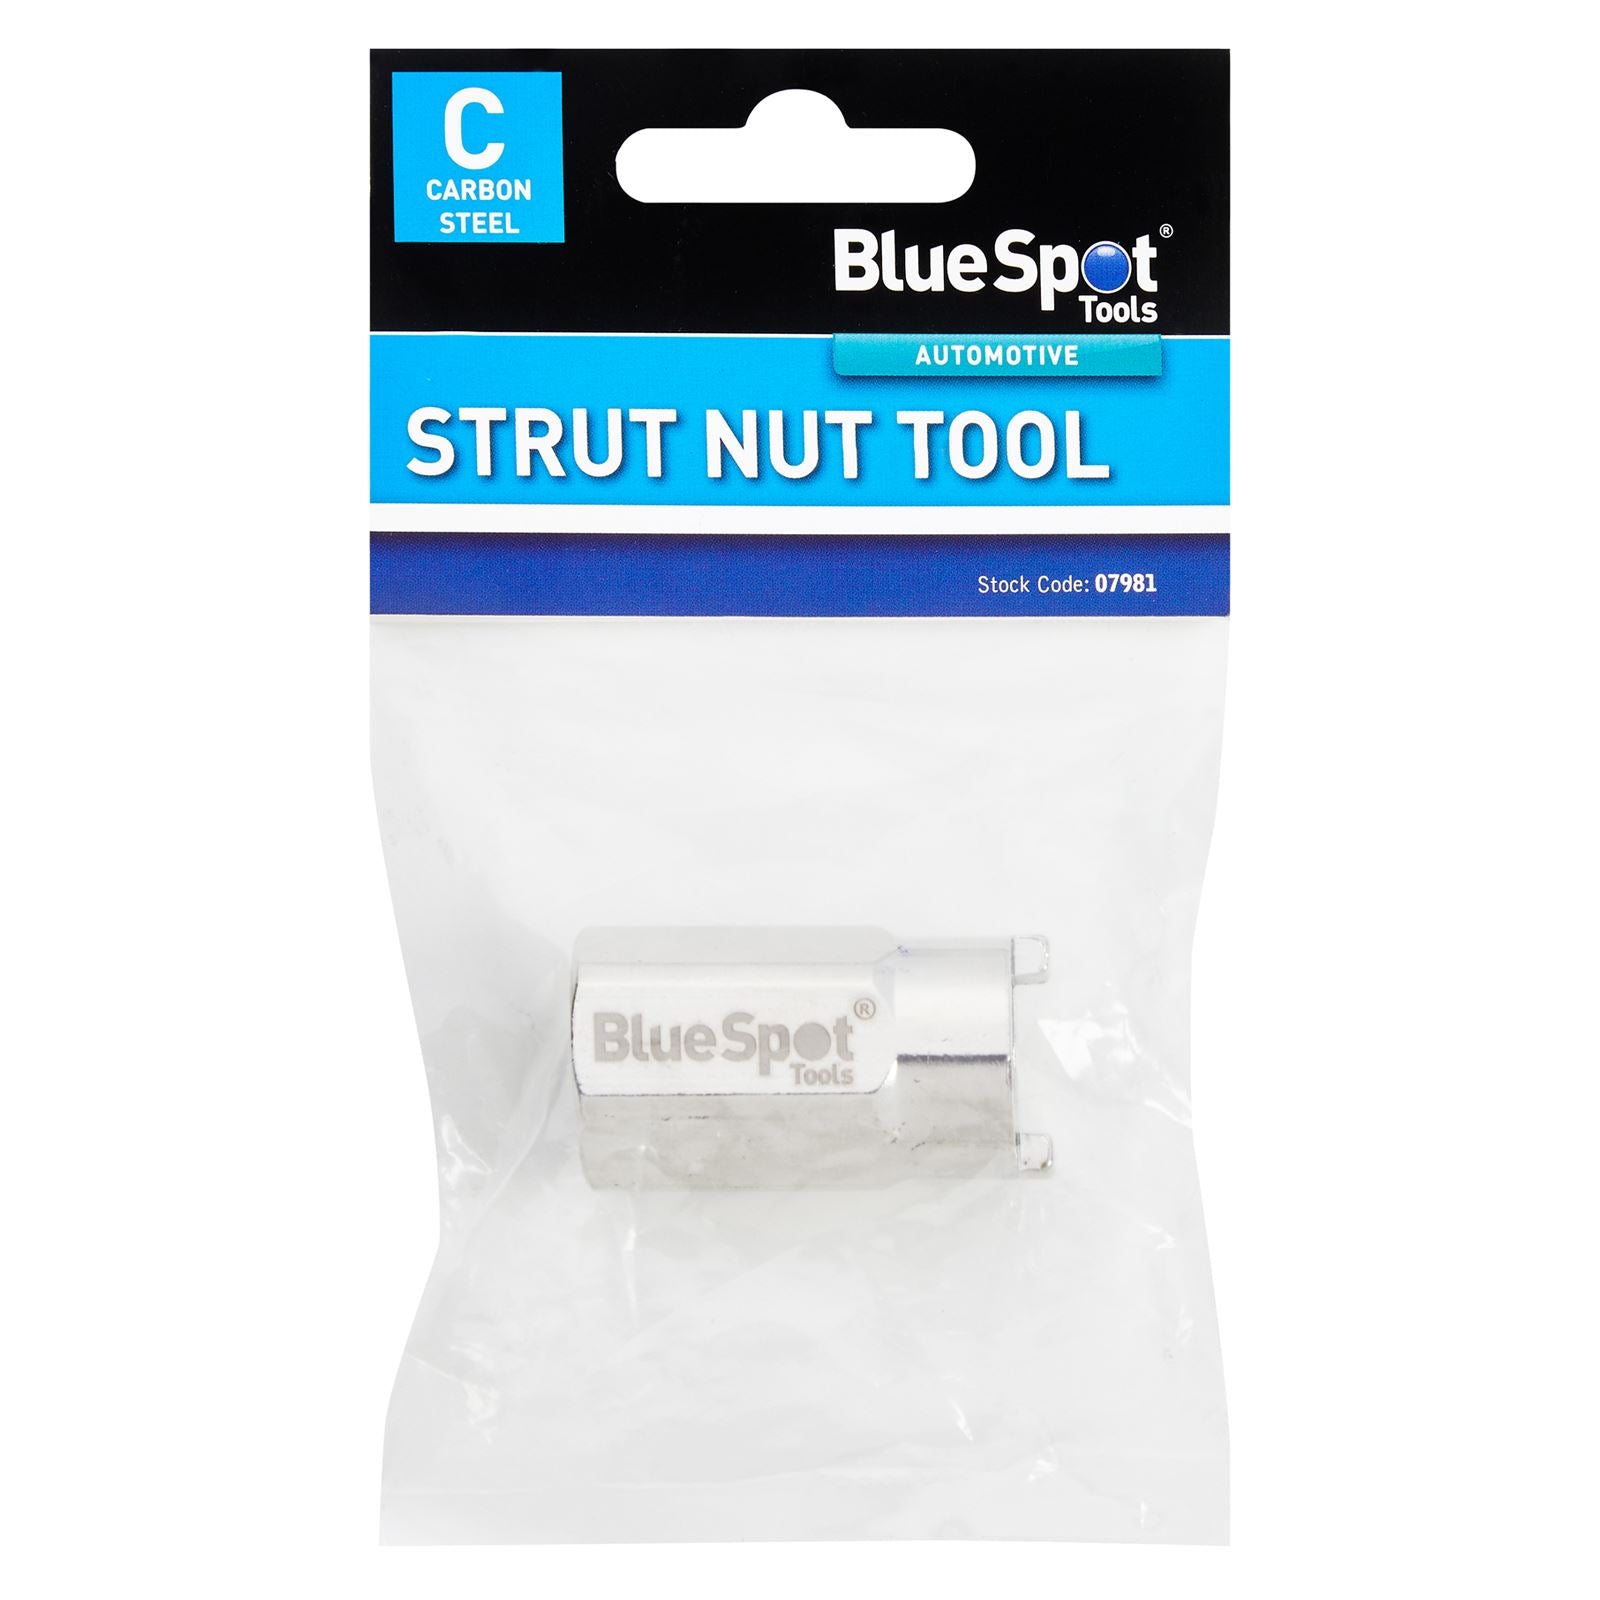 BlueSpot Strut Nut Tool